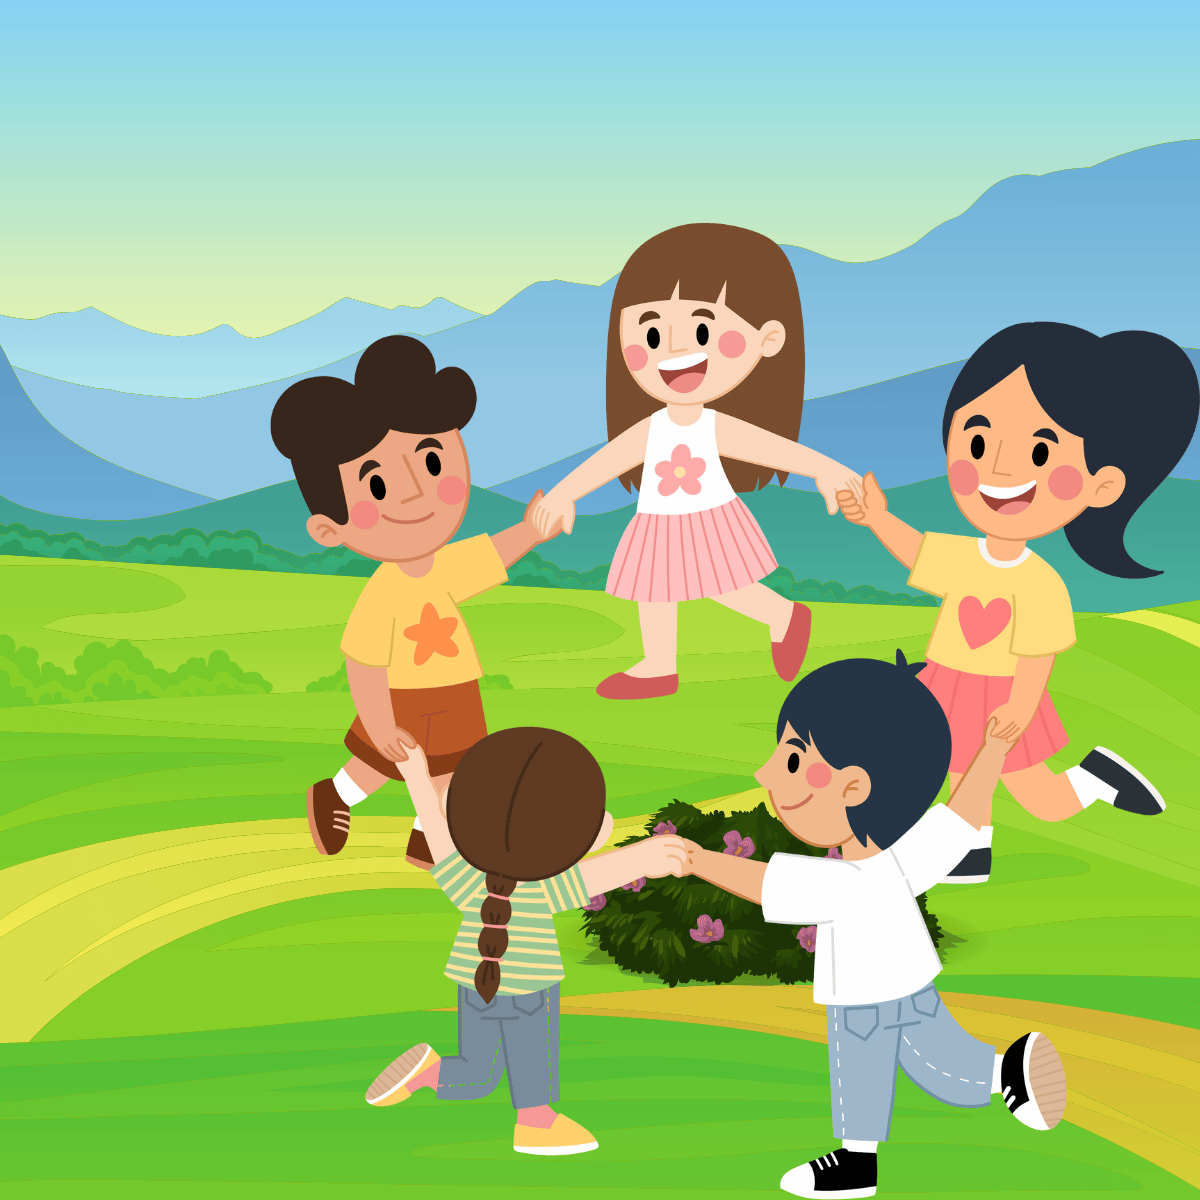 Kids dancing next to a flower bush